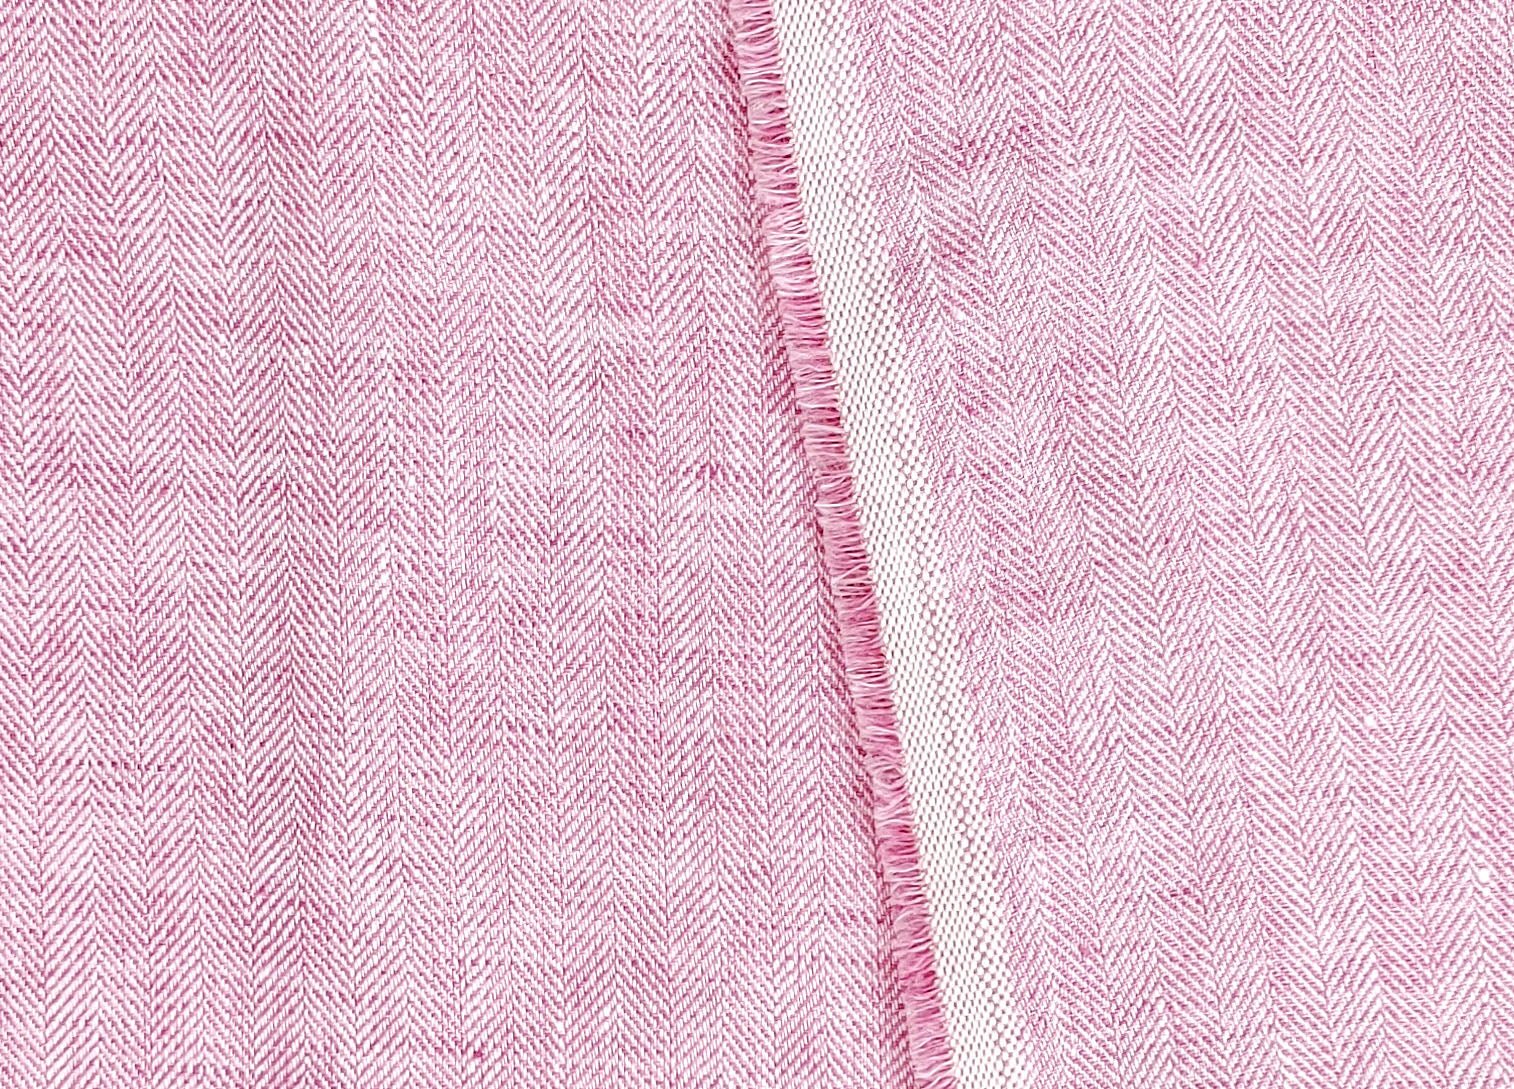 100% Linen Herringbone Twill HBT Fabric medium weight chambray 7313 7314 7727 7529 - The Linen Lab - Pink